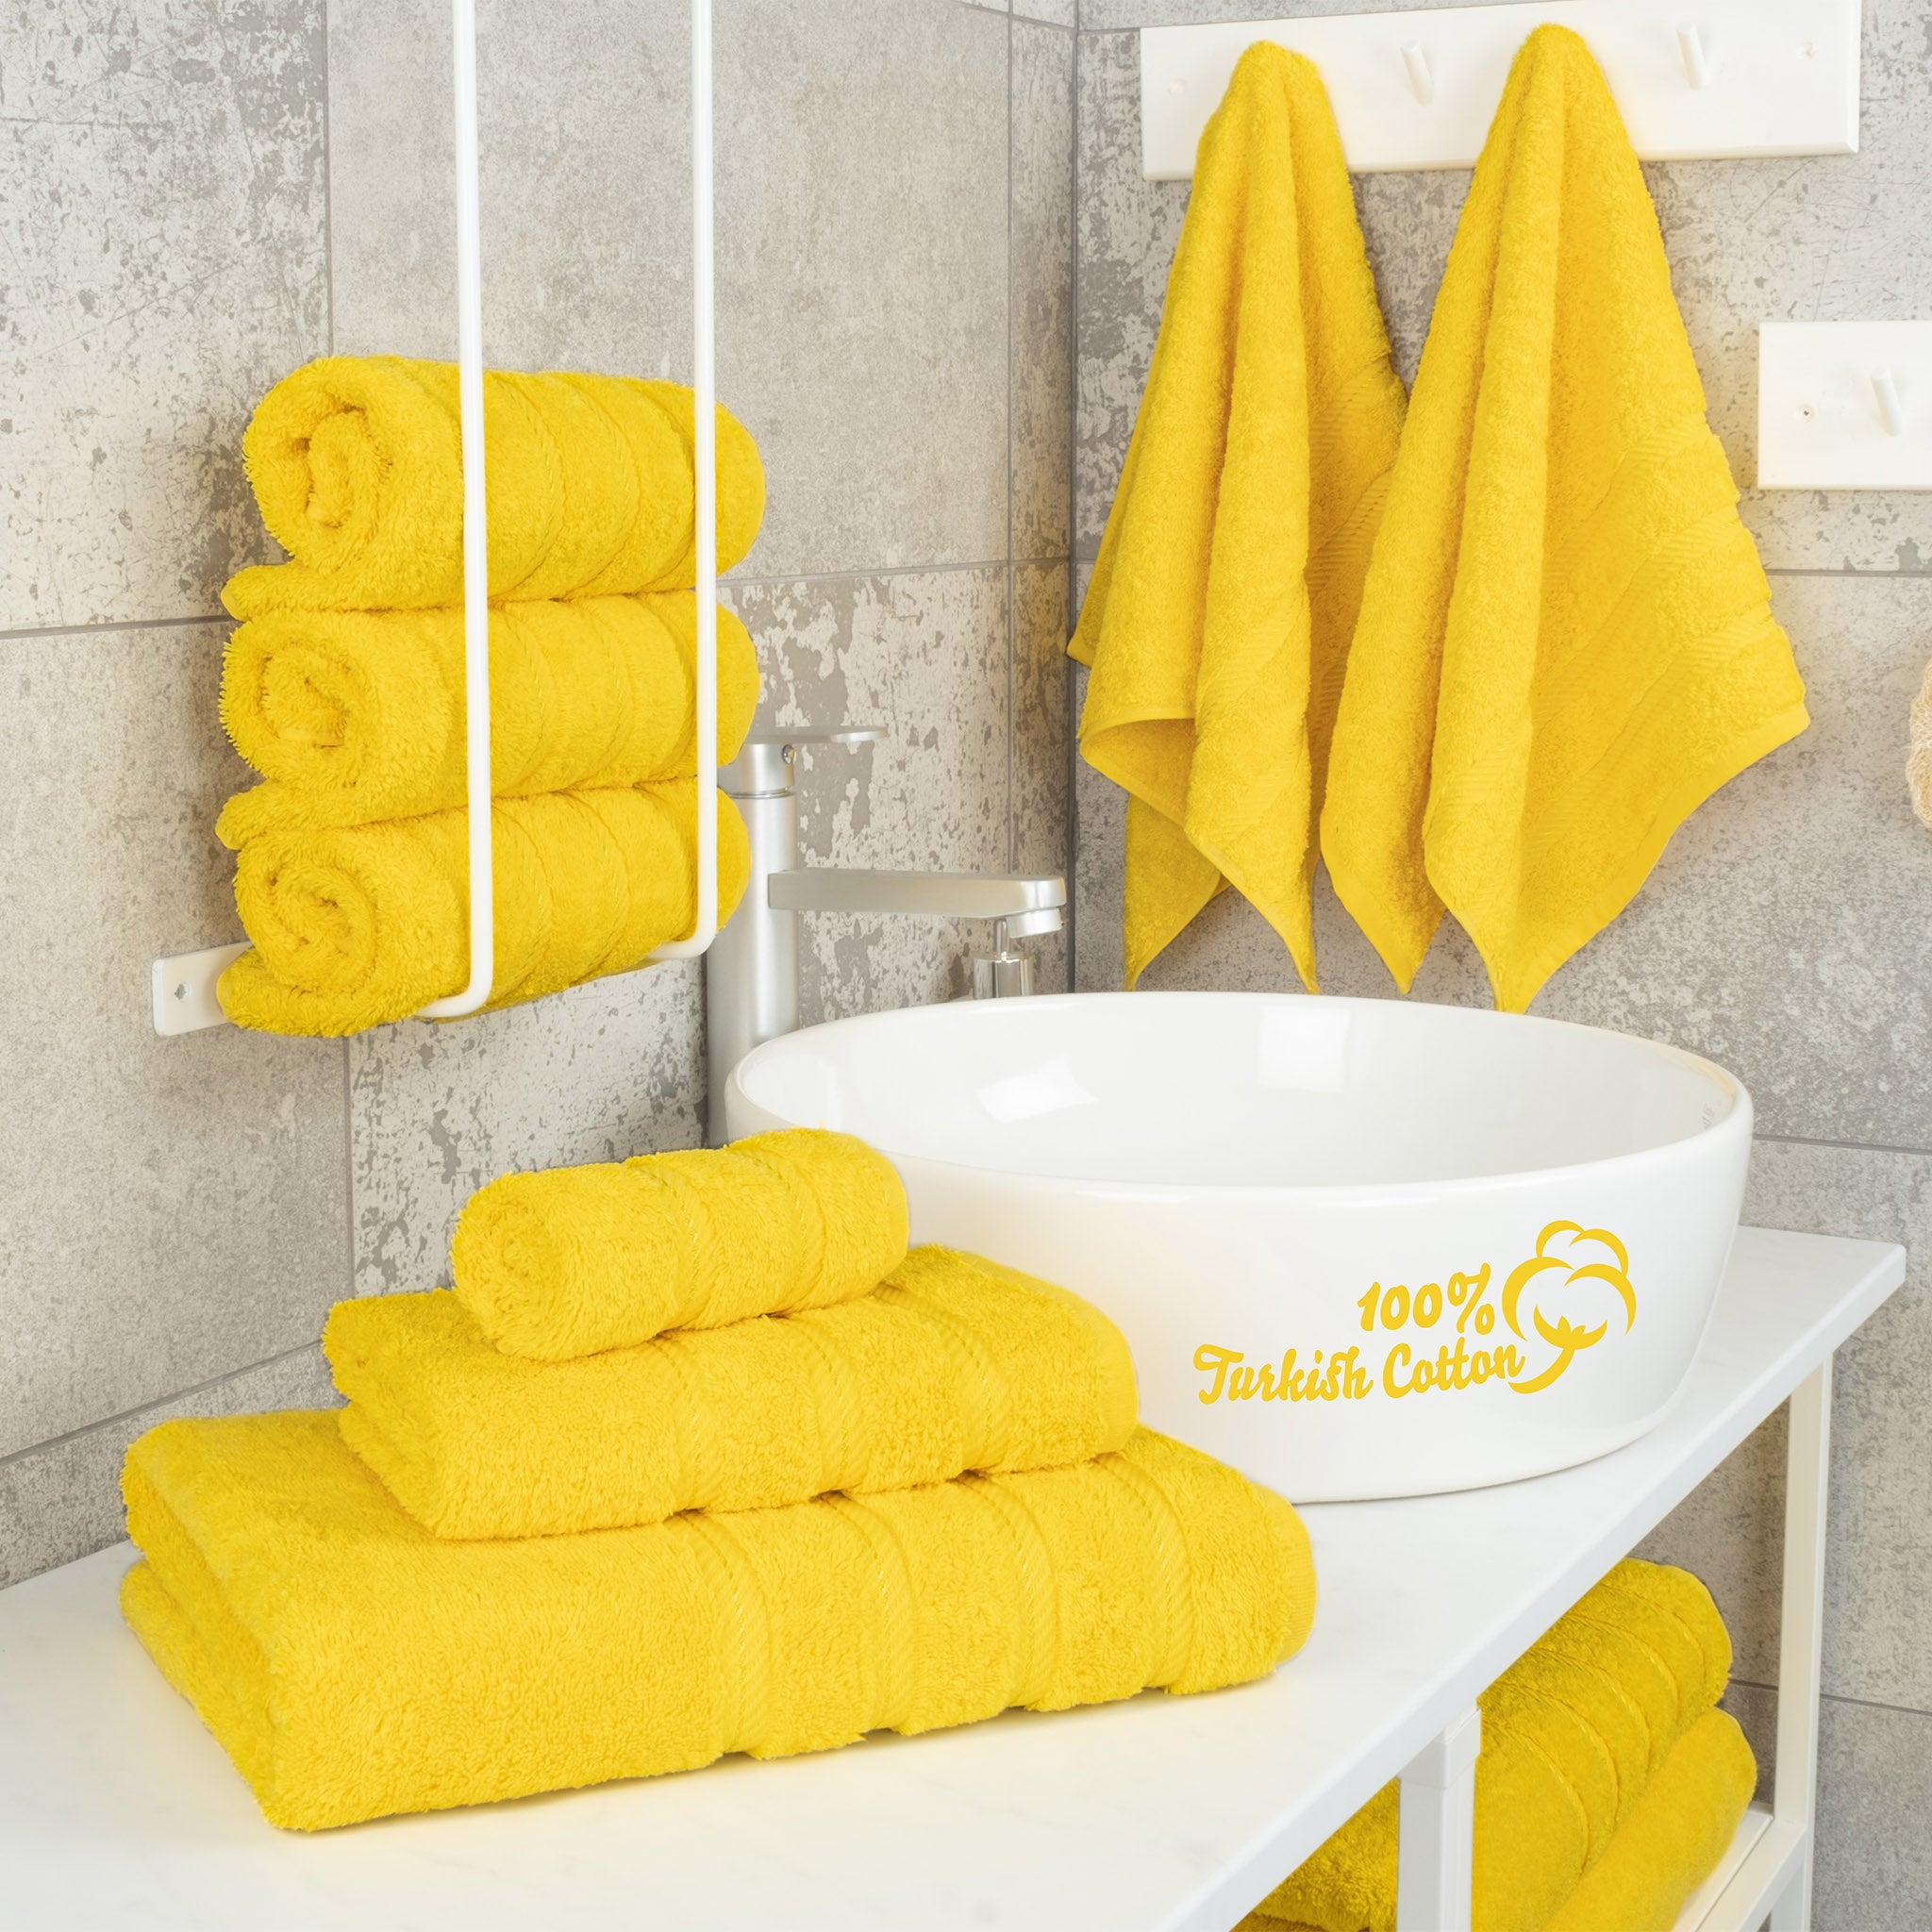 American Soft Linen 100% Turkish Cotton 6 Piece Towel Set Wholesale yellow-2